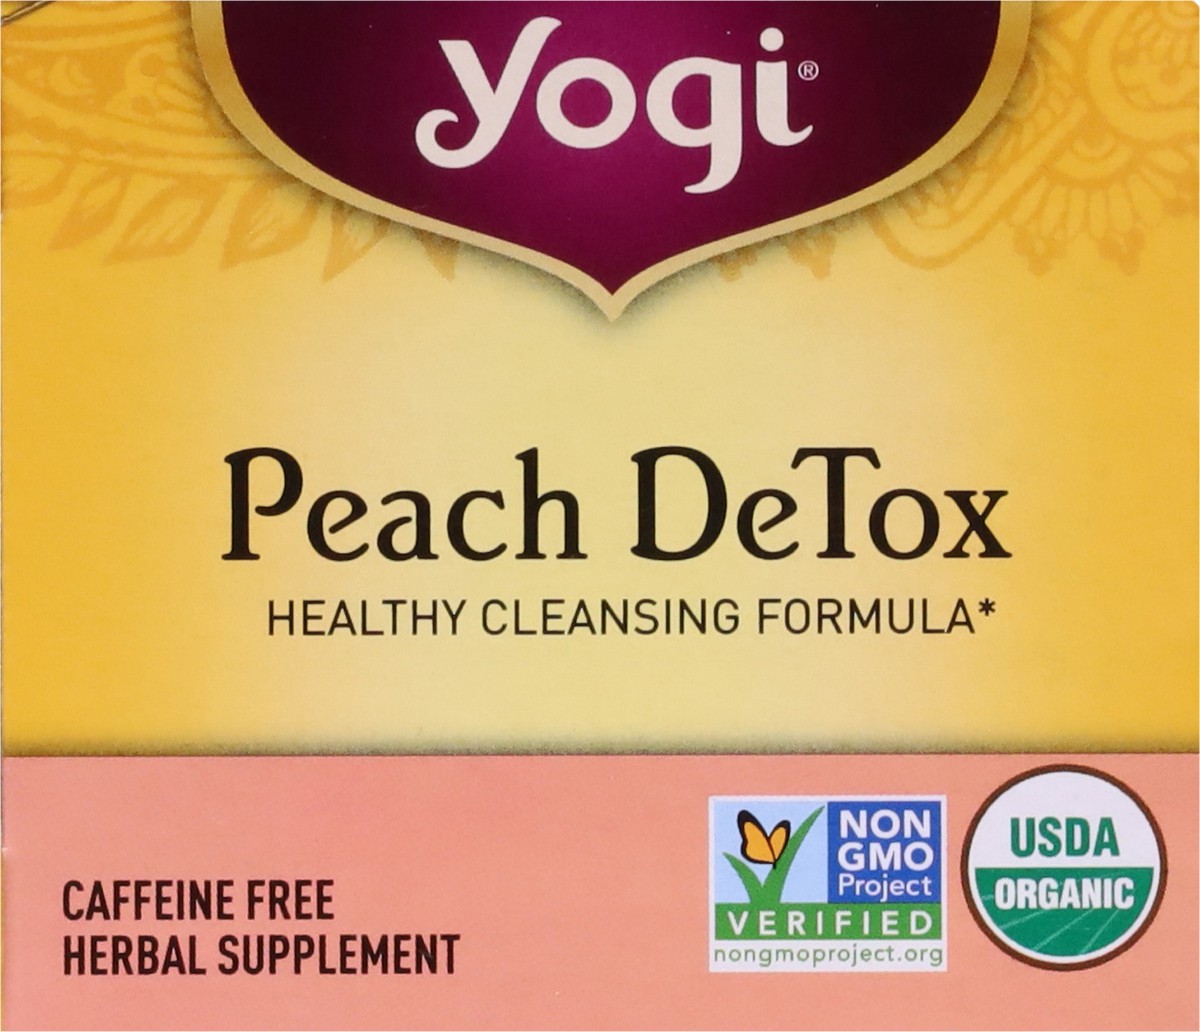 slide 9 of 9, Yogi Caffeine Free Peach DeTox Tea Bags 16 Tea Bags, 16 ct